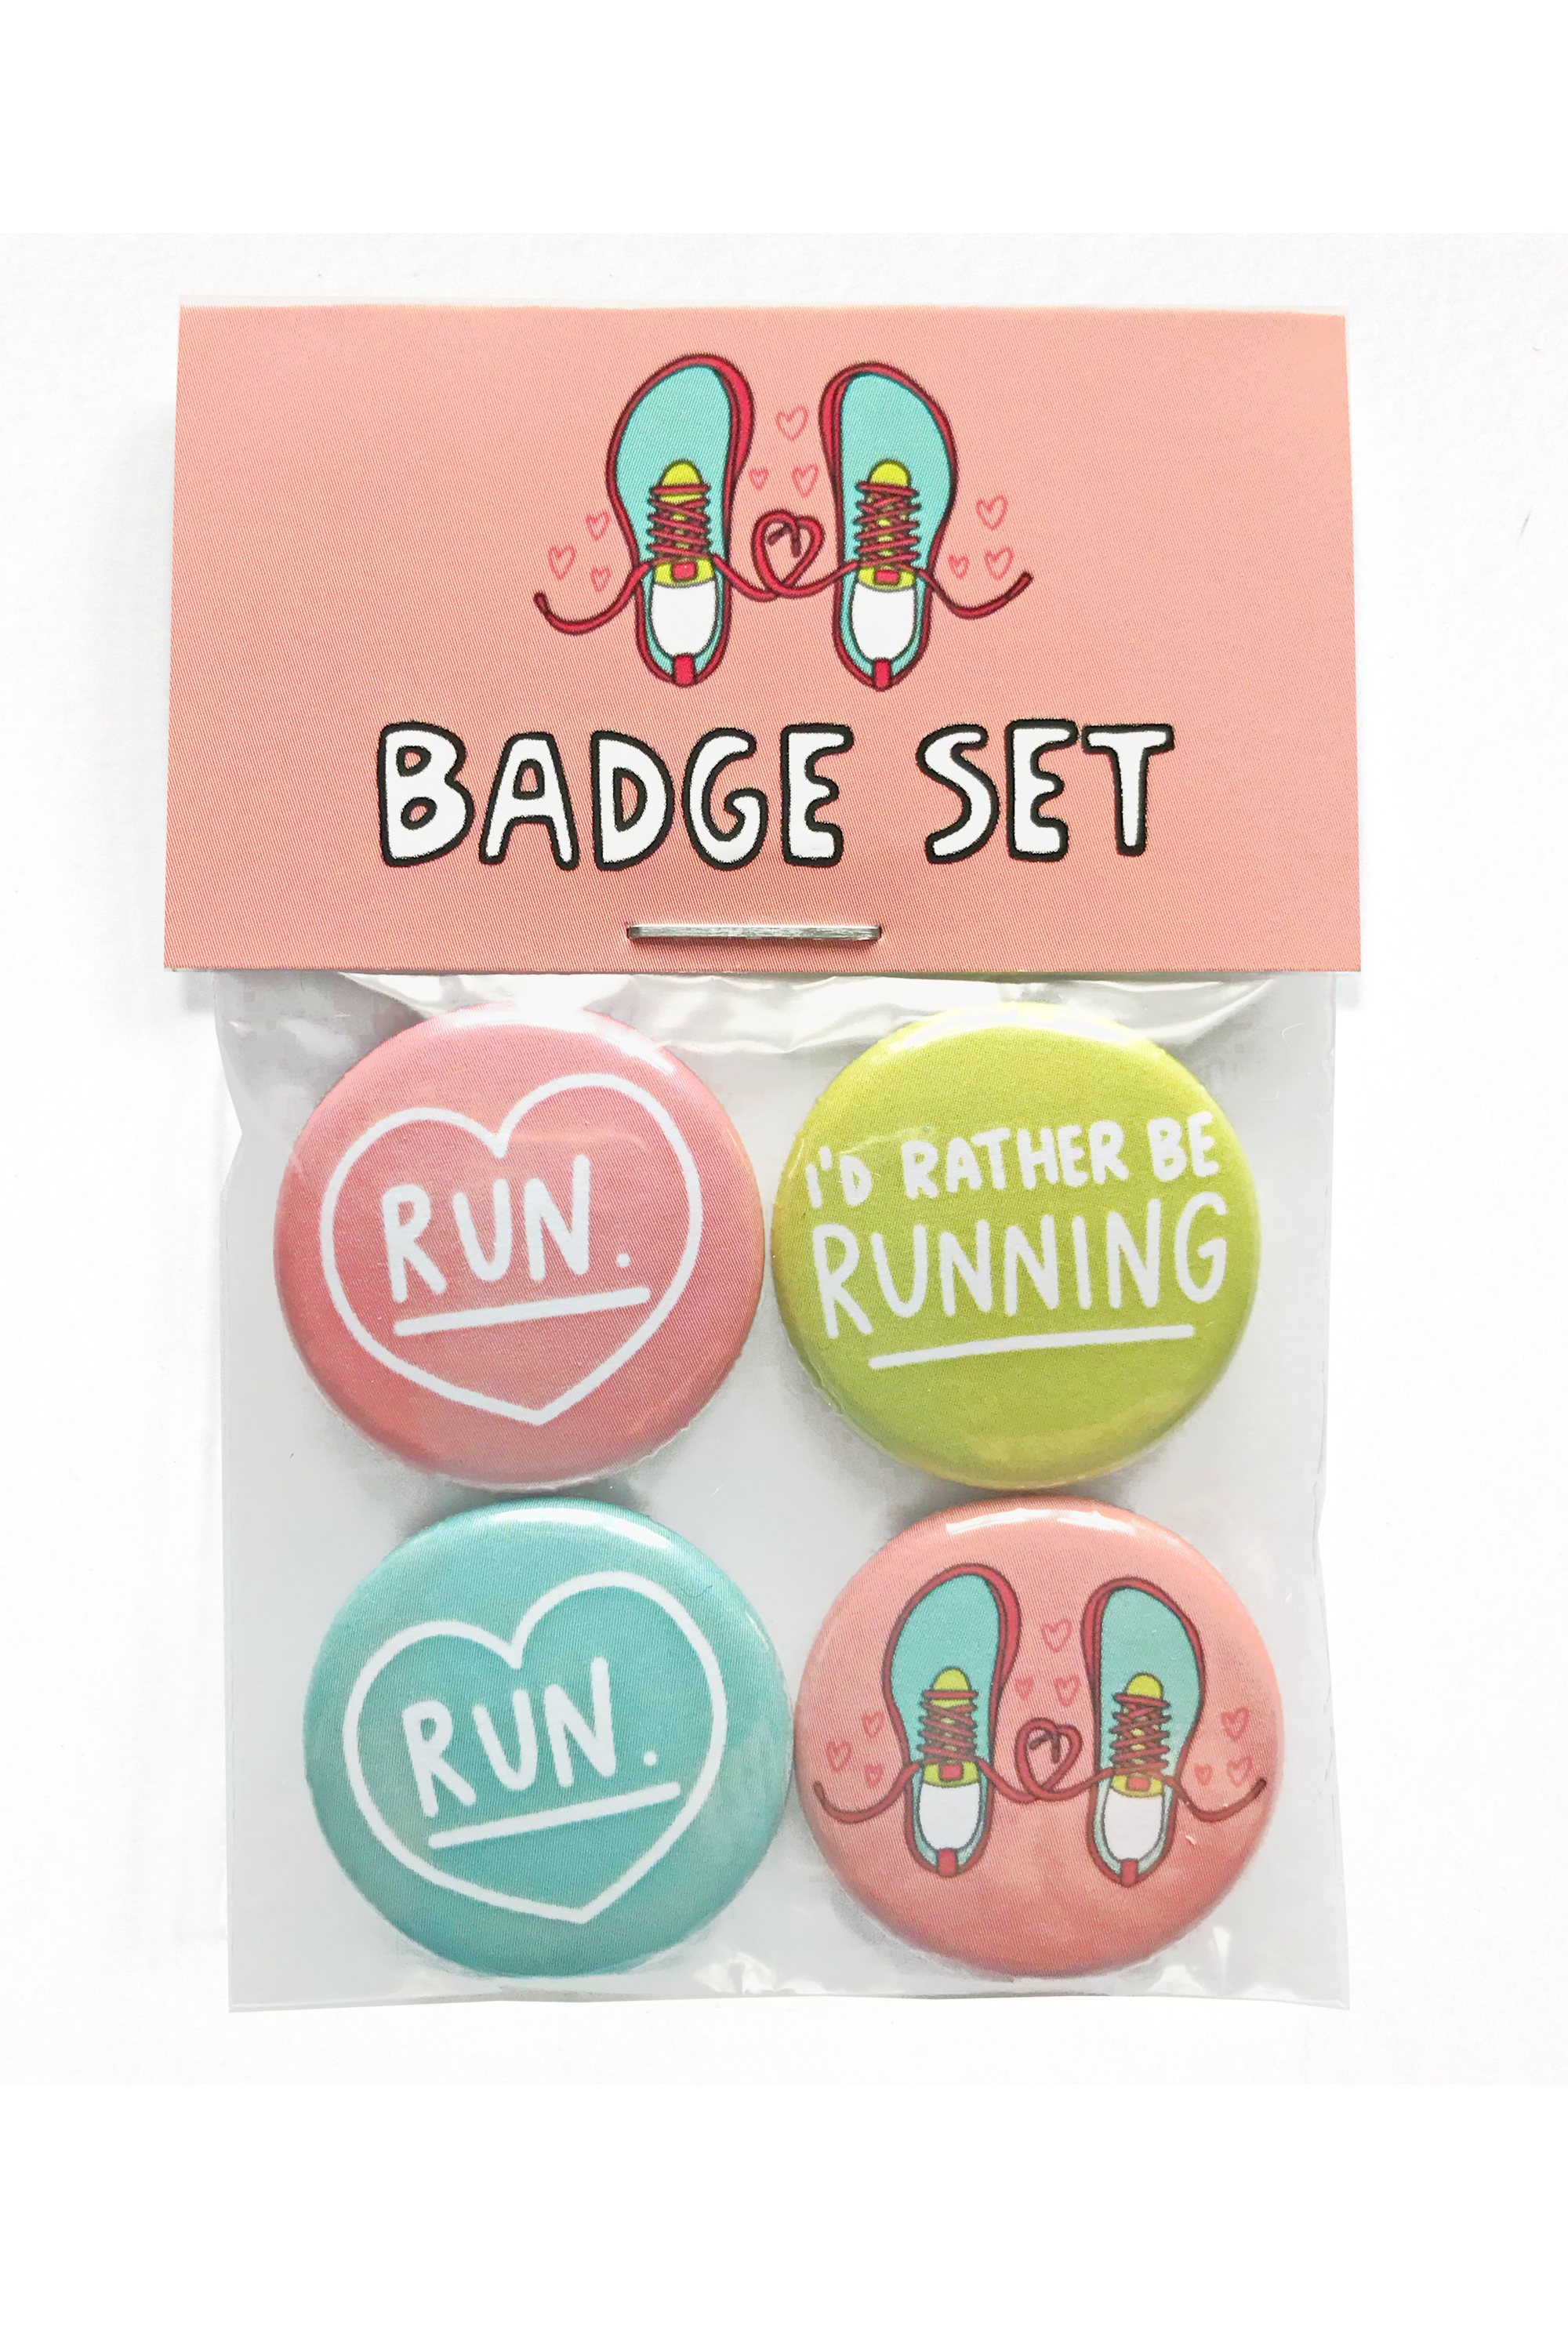 Running Badges - set of 4